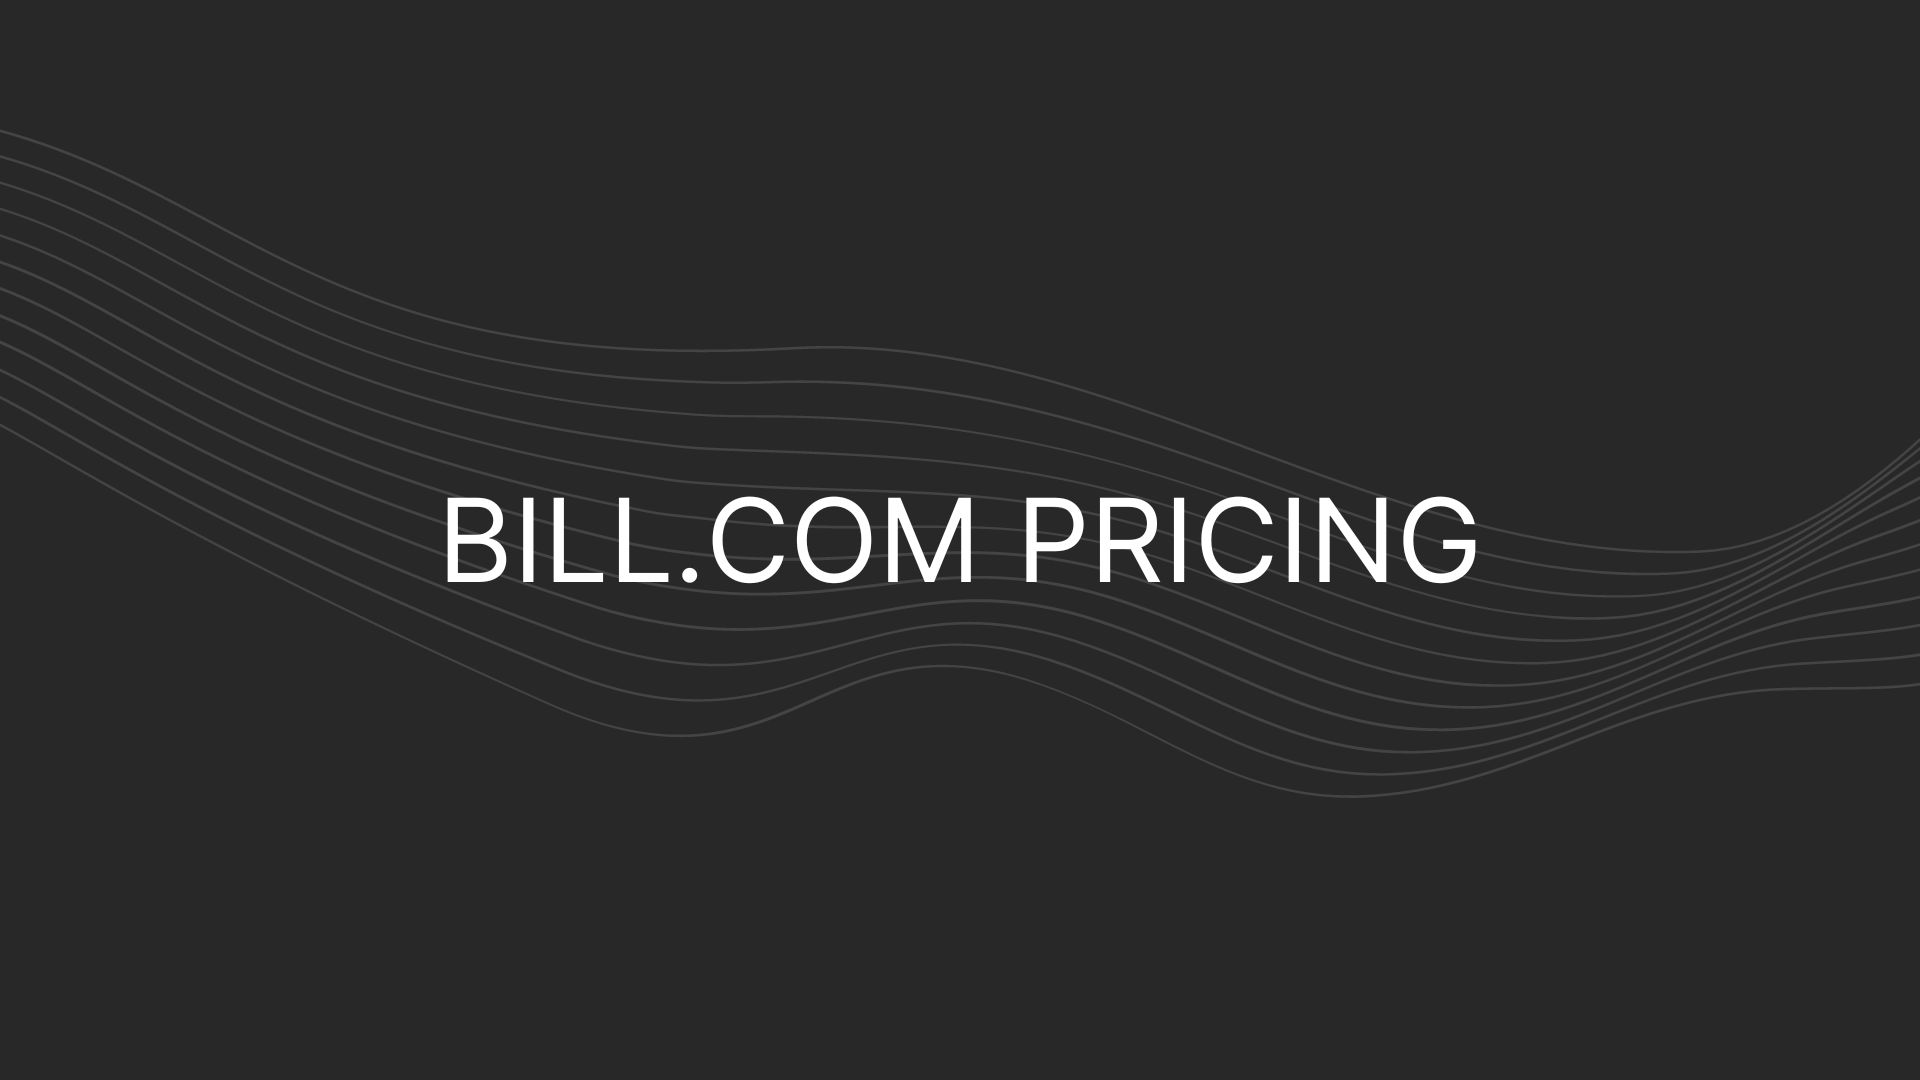 Bill.com pricing